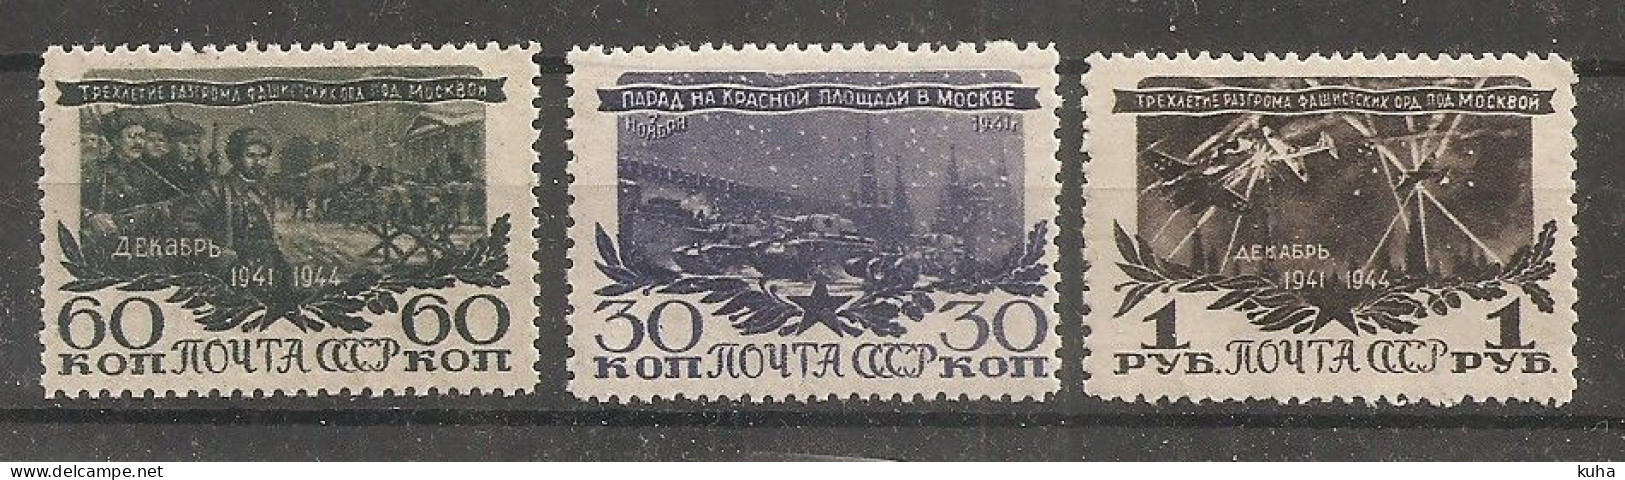 Russia Russie USSR Soviet Union 1945 WWII   MNH - Ongebruikt